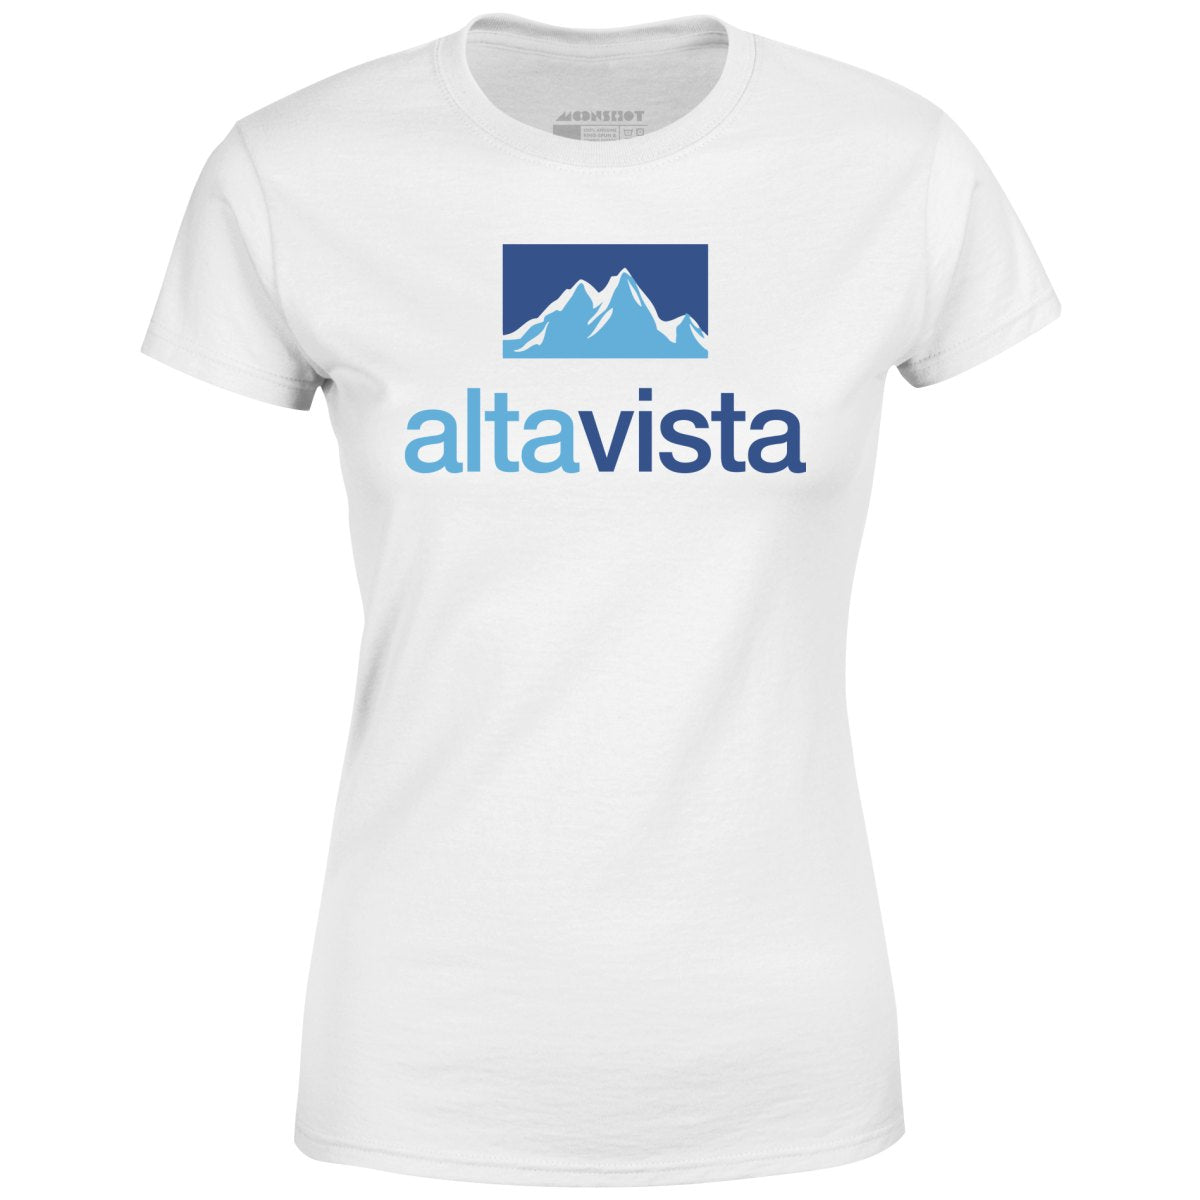 Alta Vista - Vintage Internet - Women's T-Shirt